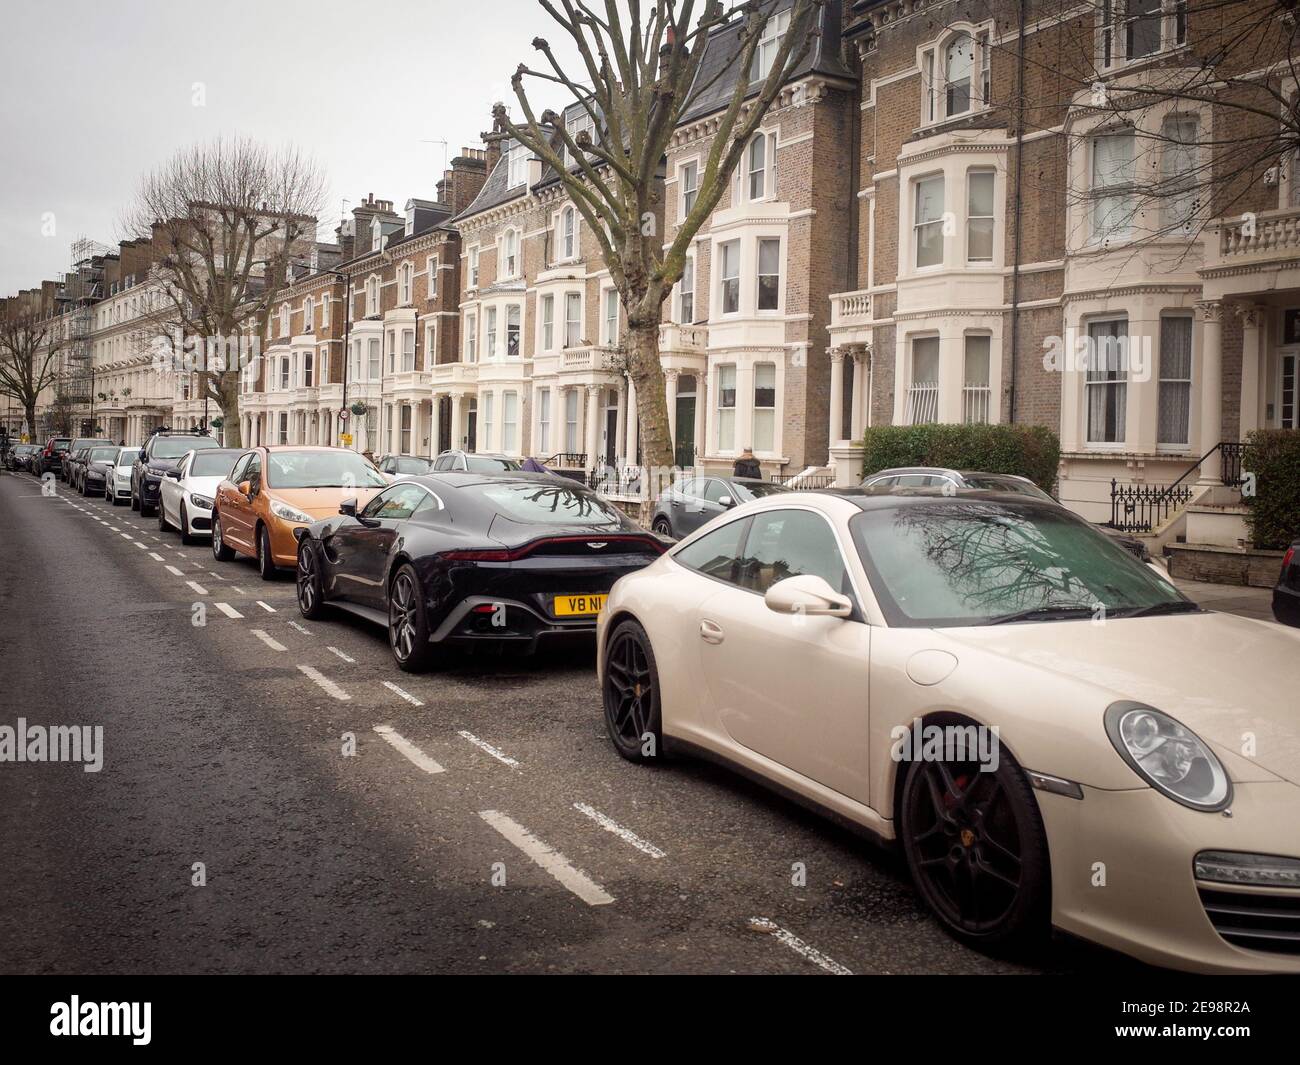 London- Expensive cars parked on upmarket street in Maida Vale area of Paddington, North West London Stock Photo